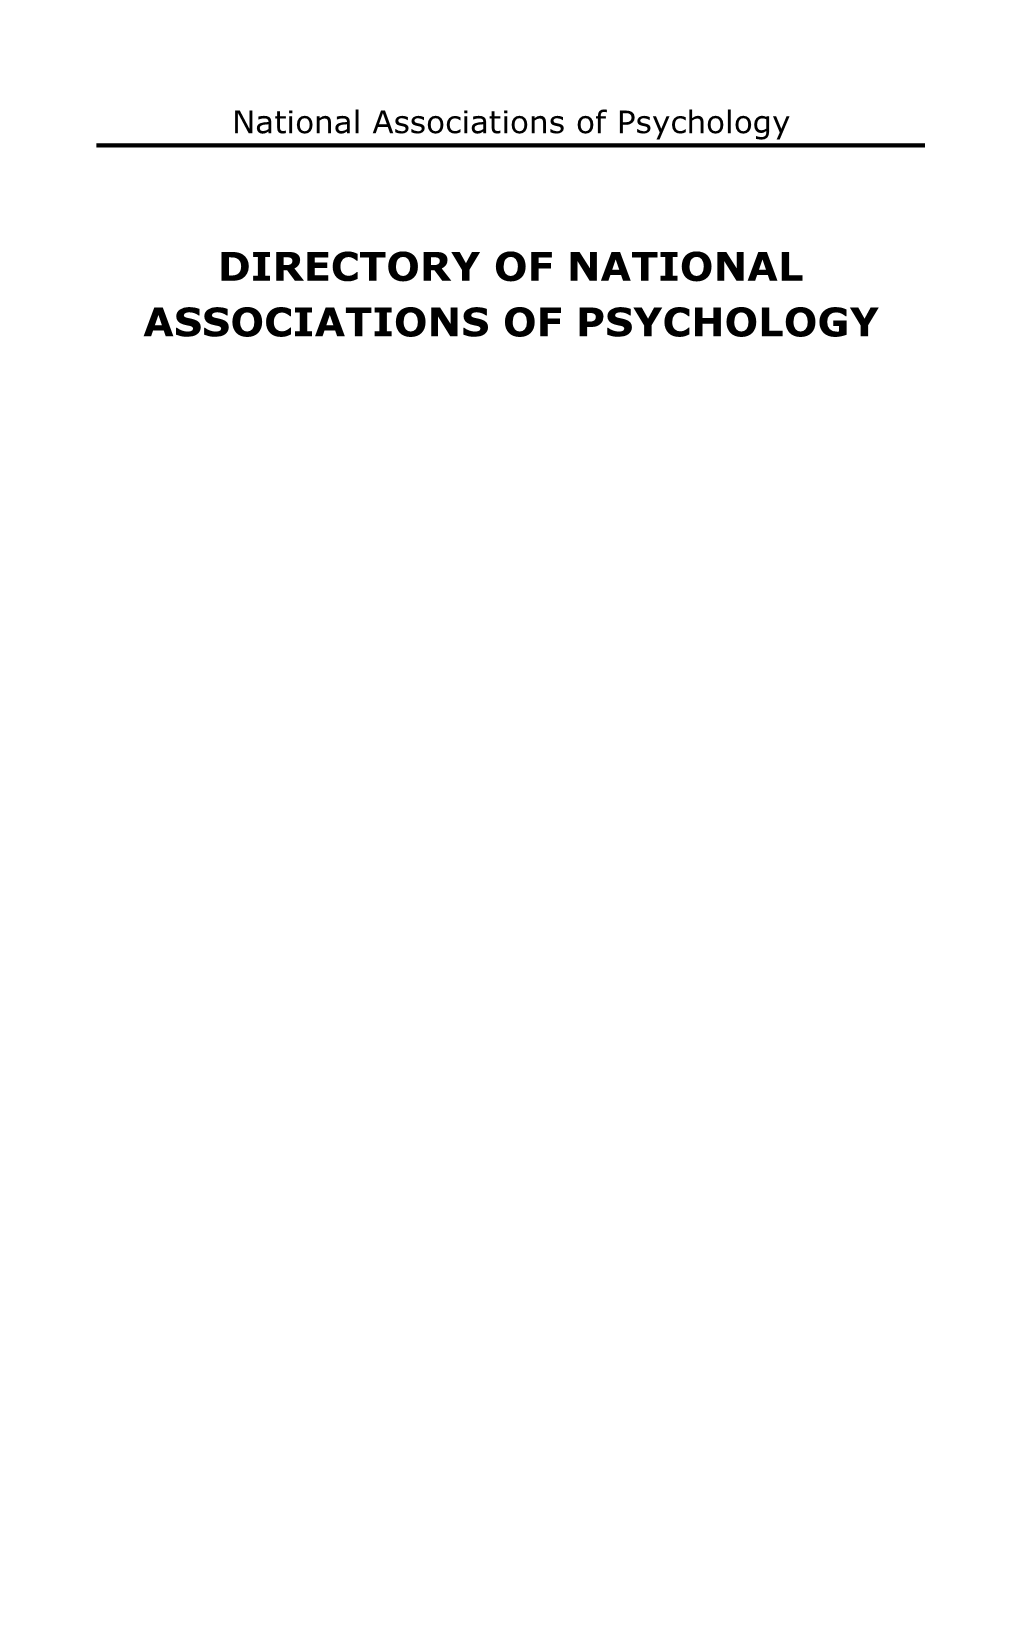 Directory Ofnational Associationsof Psychology